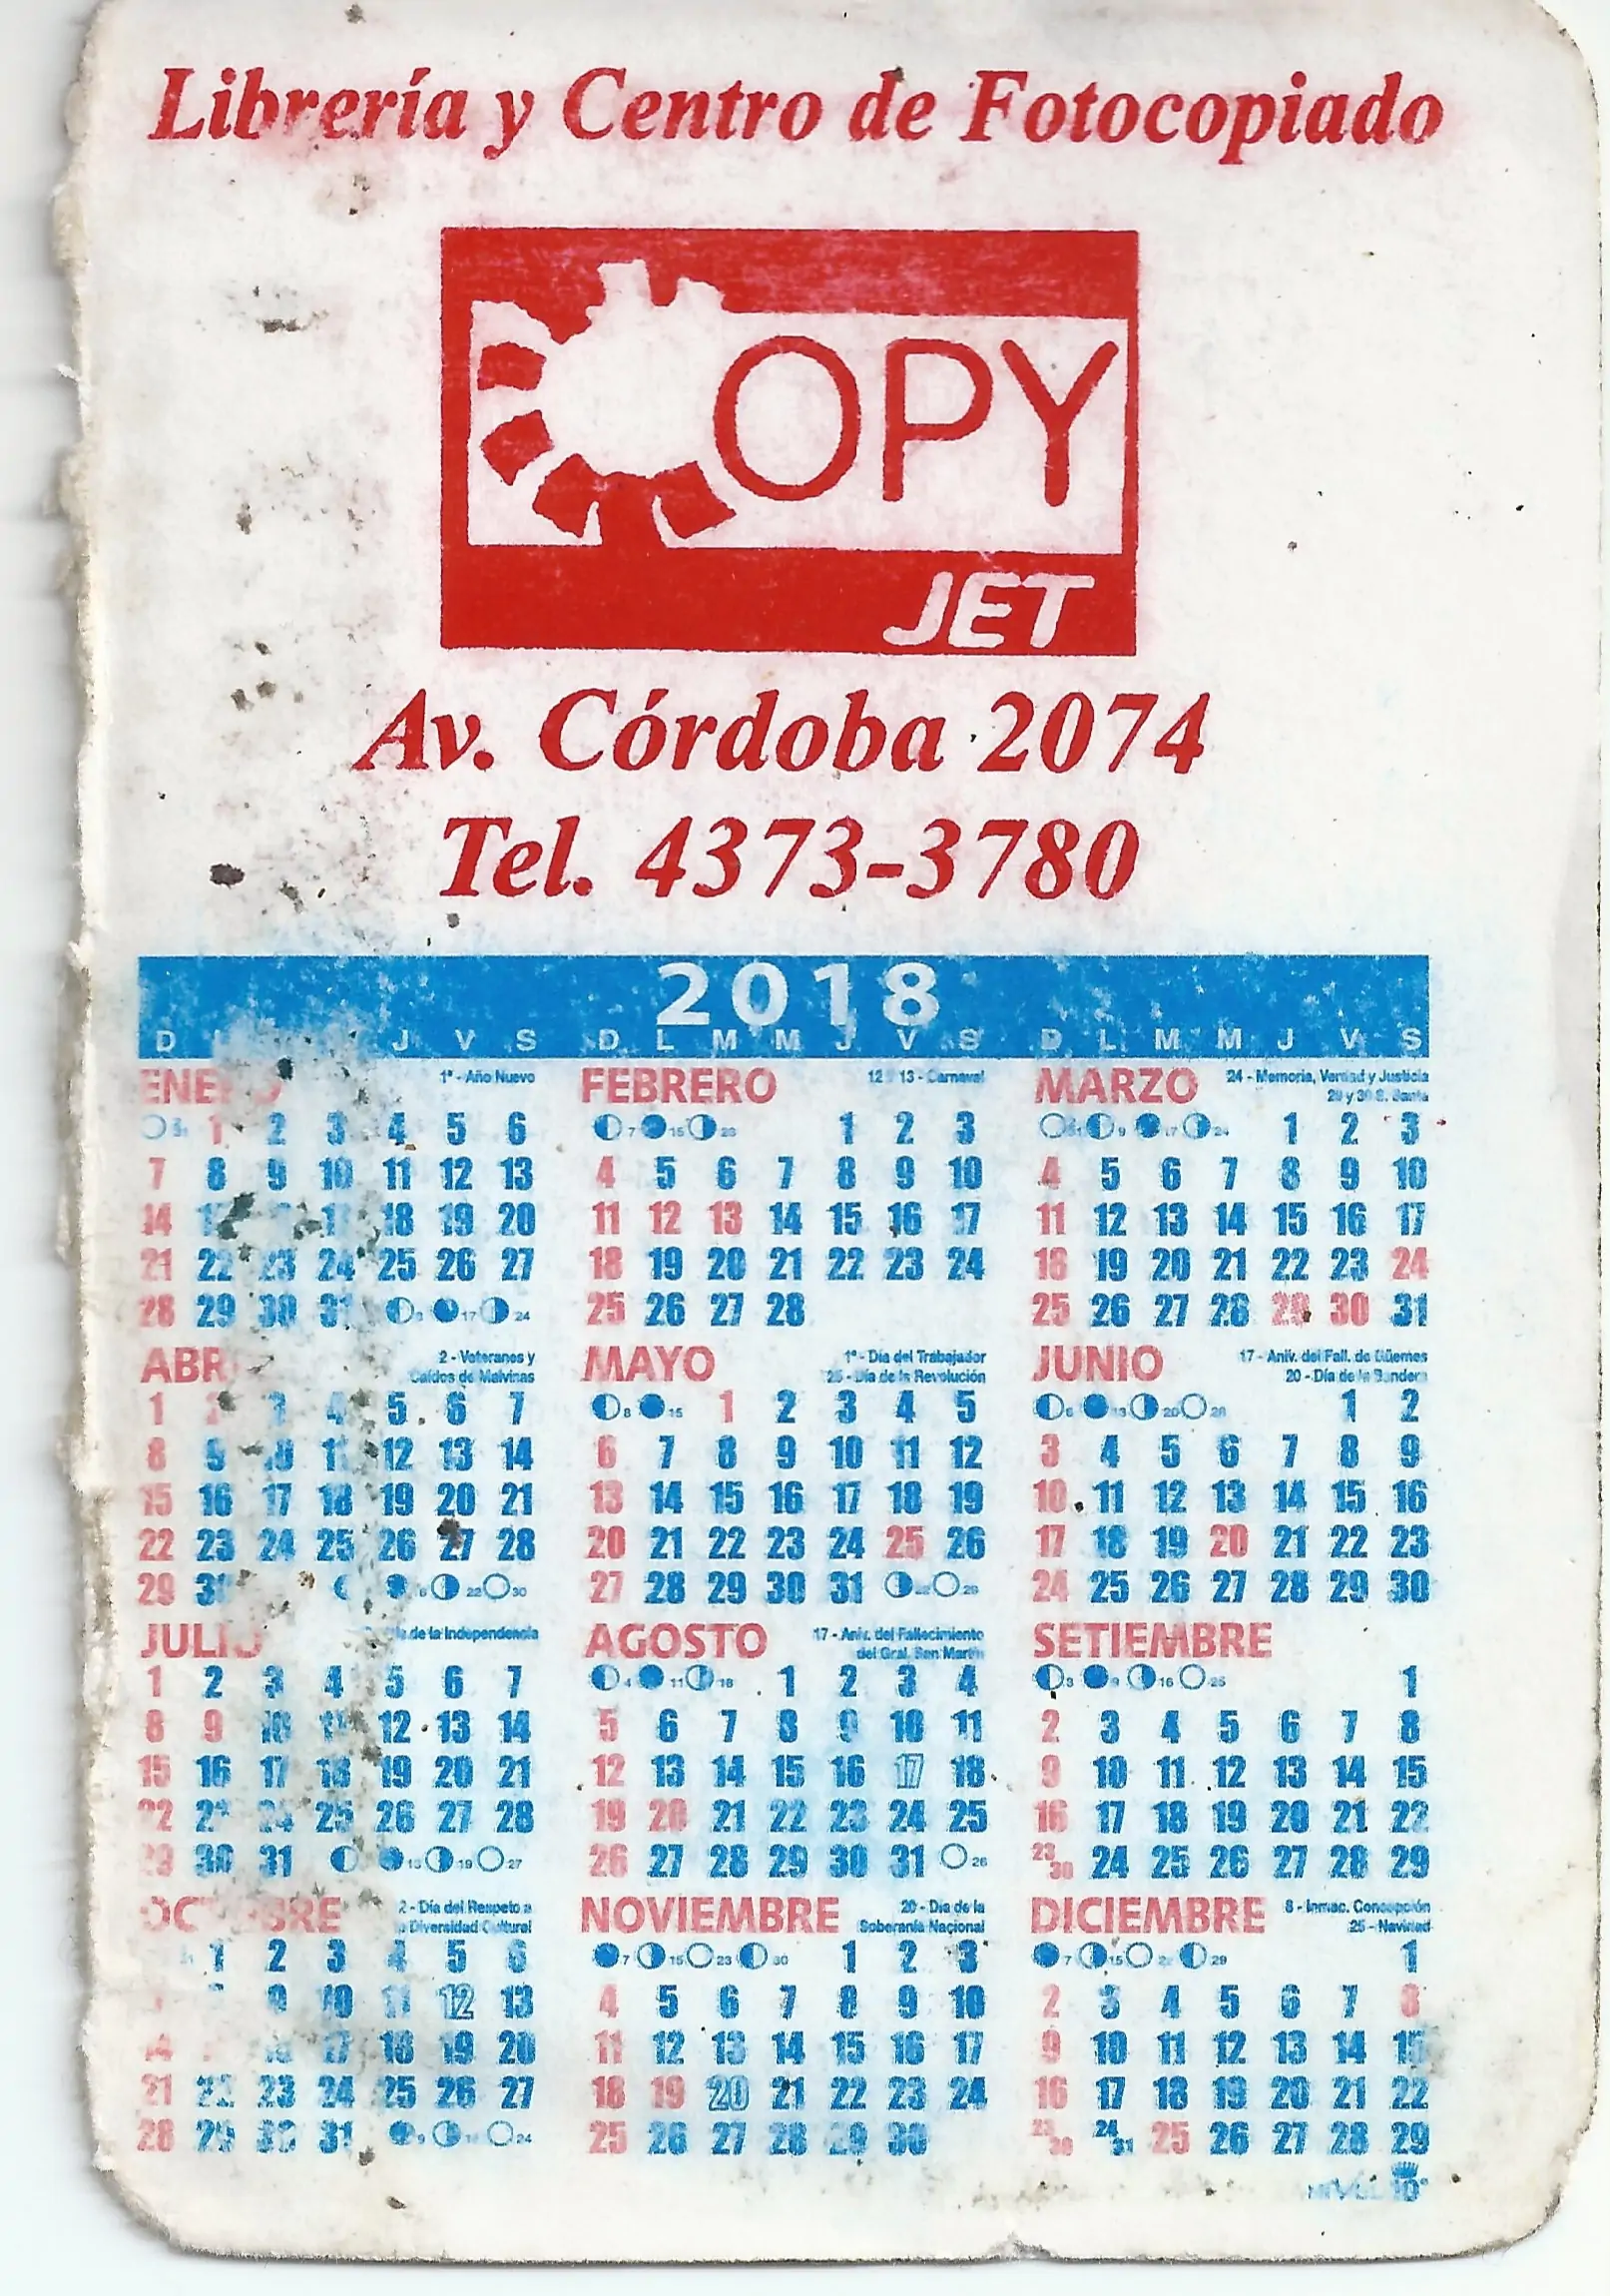 Copy Jet calendar 2018, Avenida Cordoba 2074, Buenos Aires